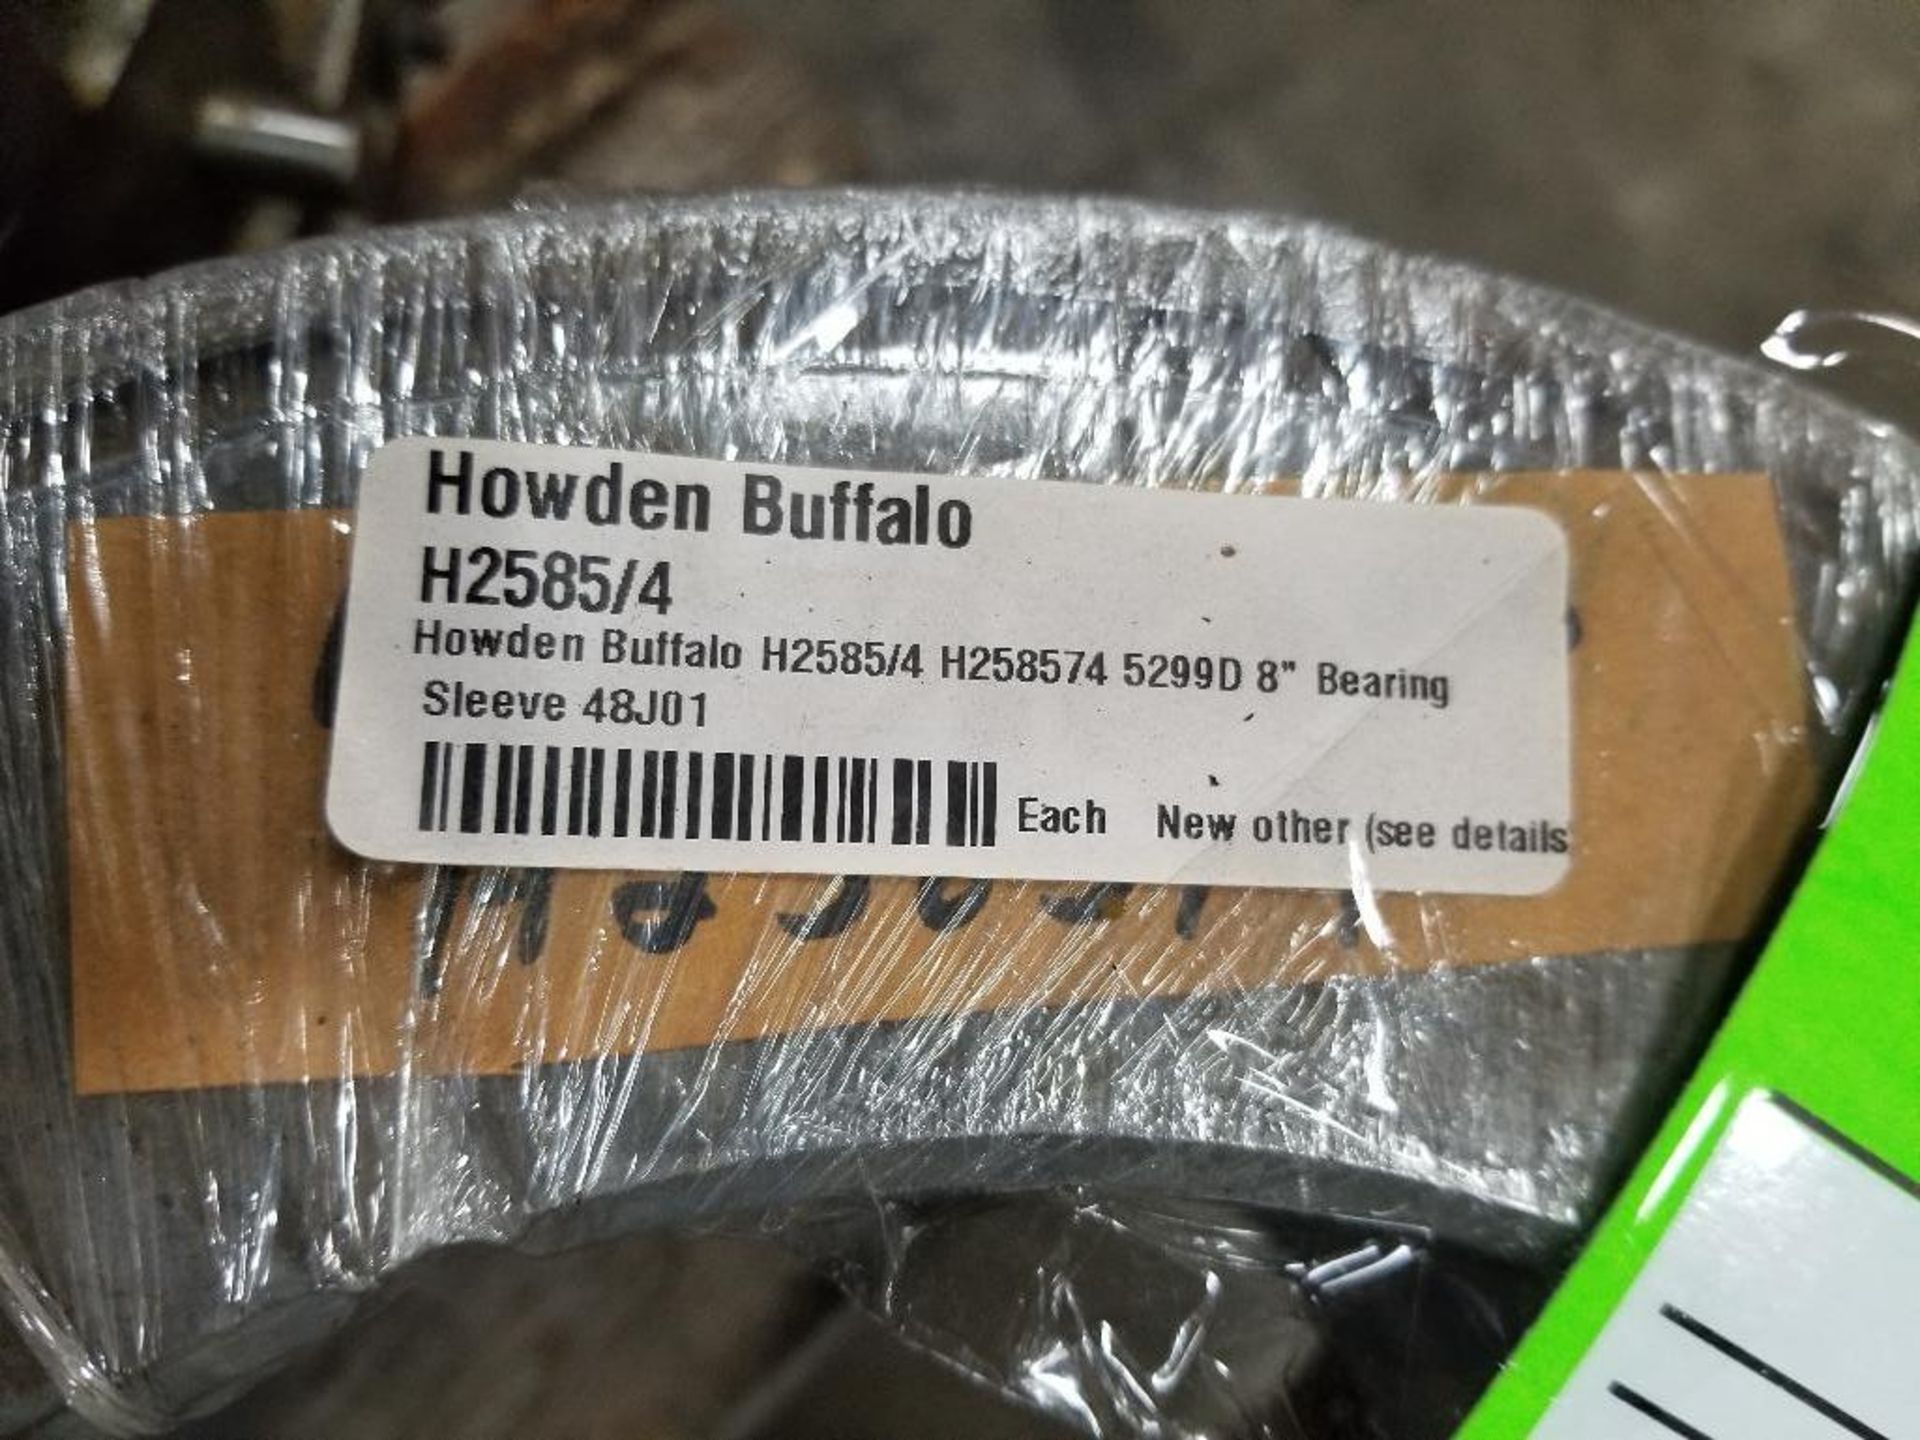 Howden Buffalo split bearing. 8" bearing sleeve. - Image 2 of 3